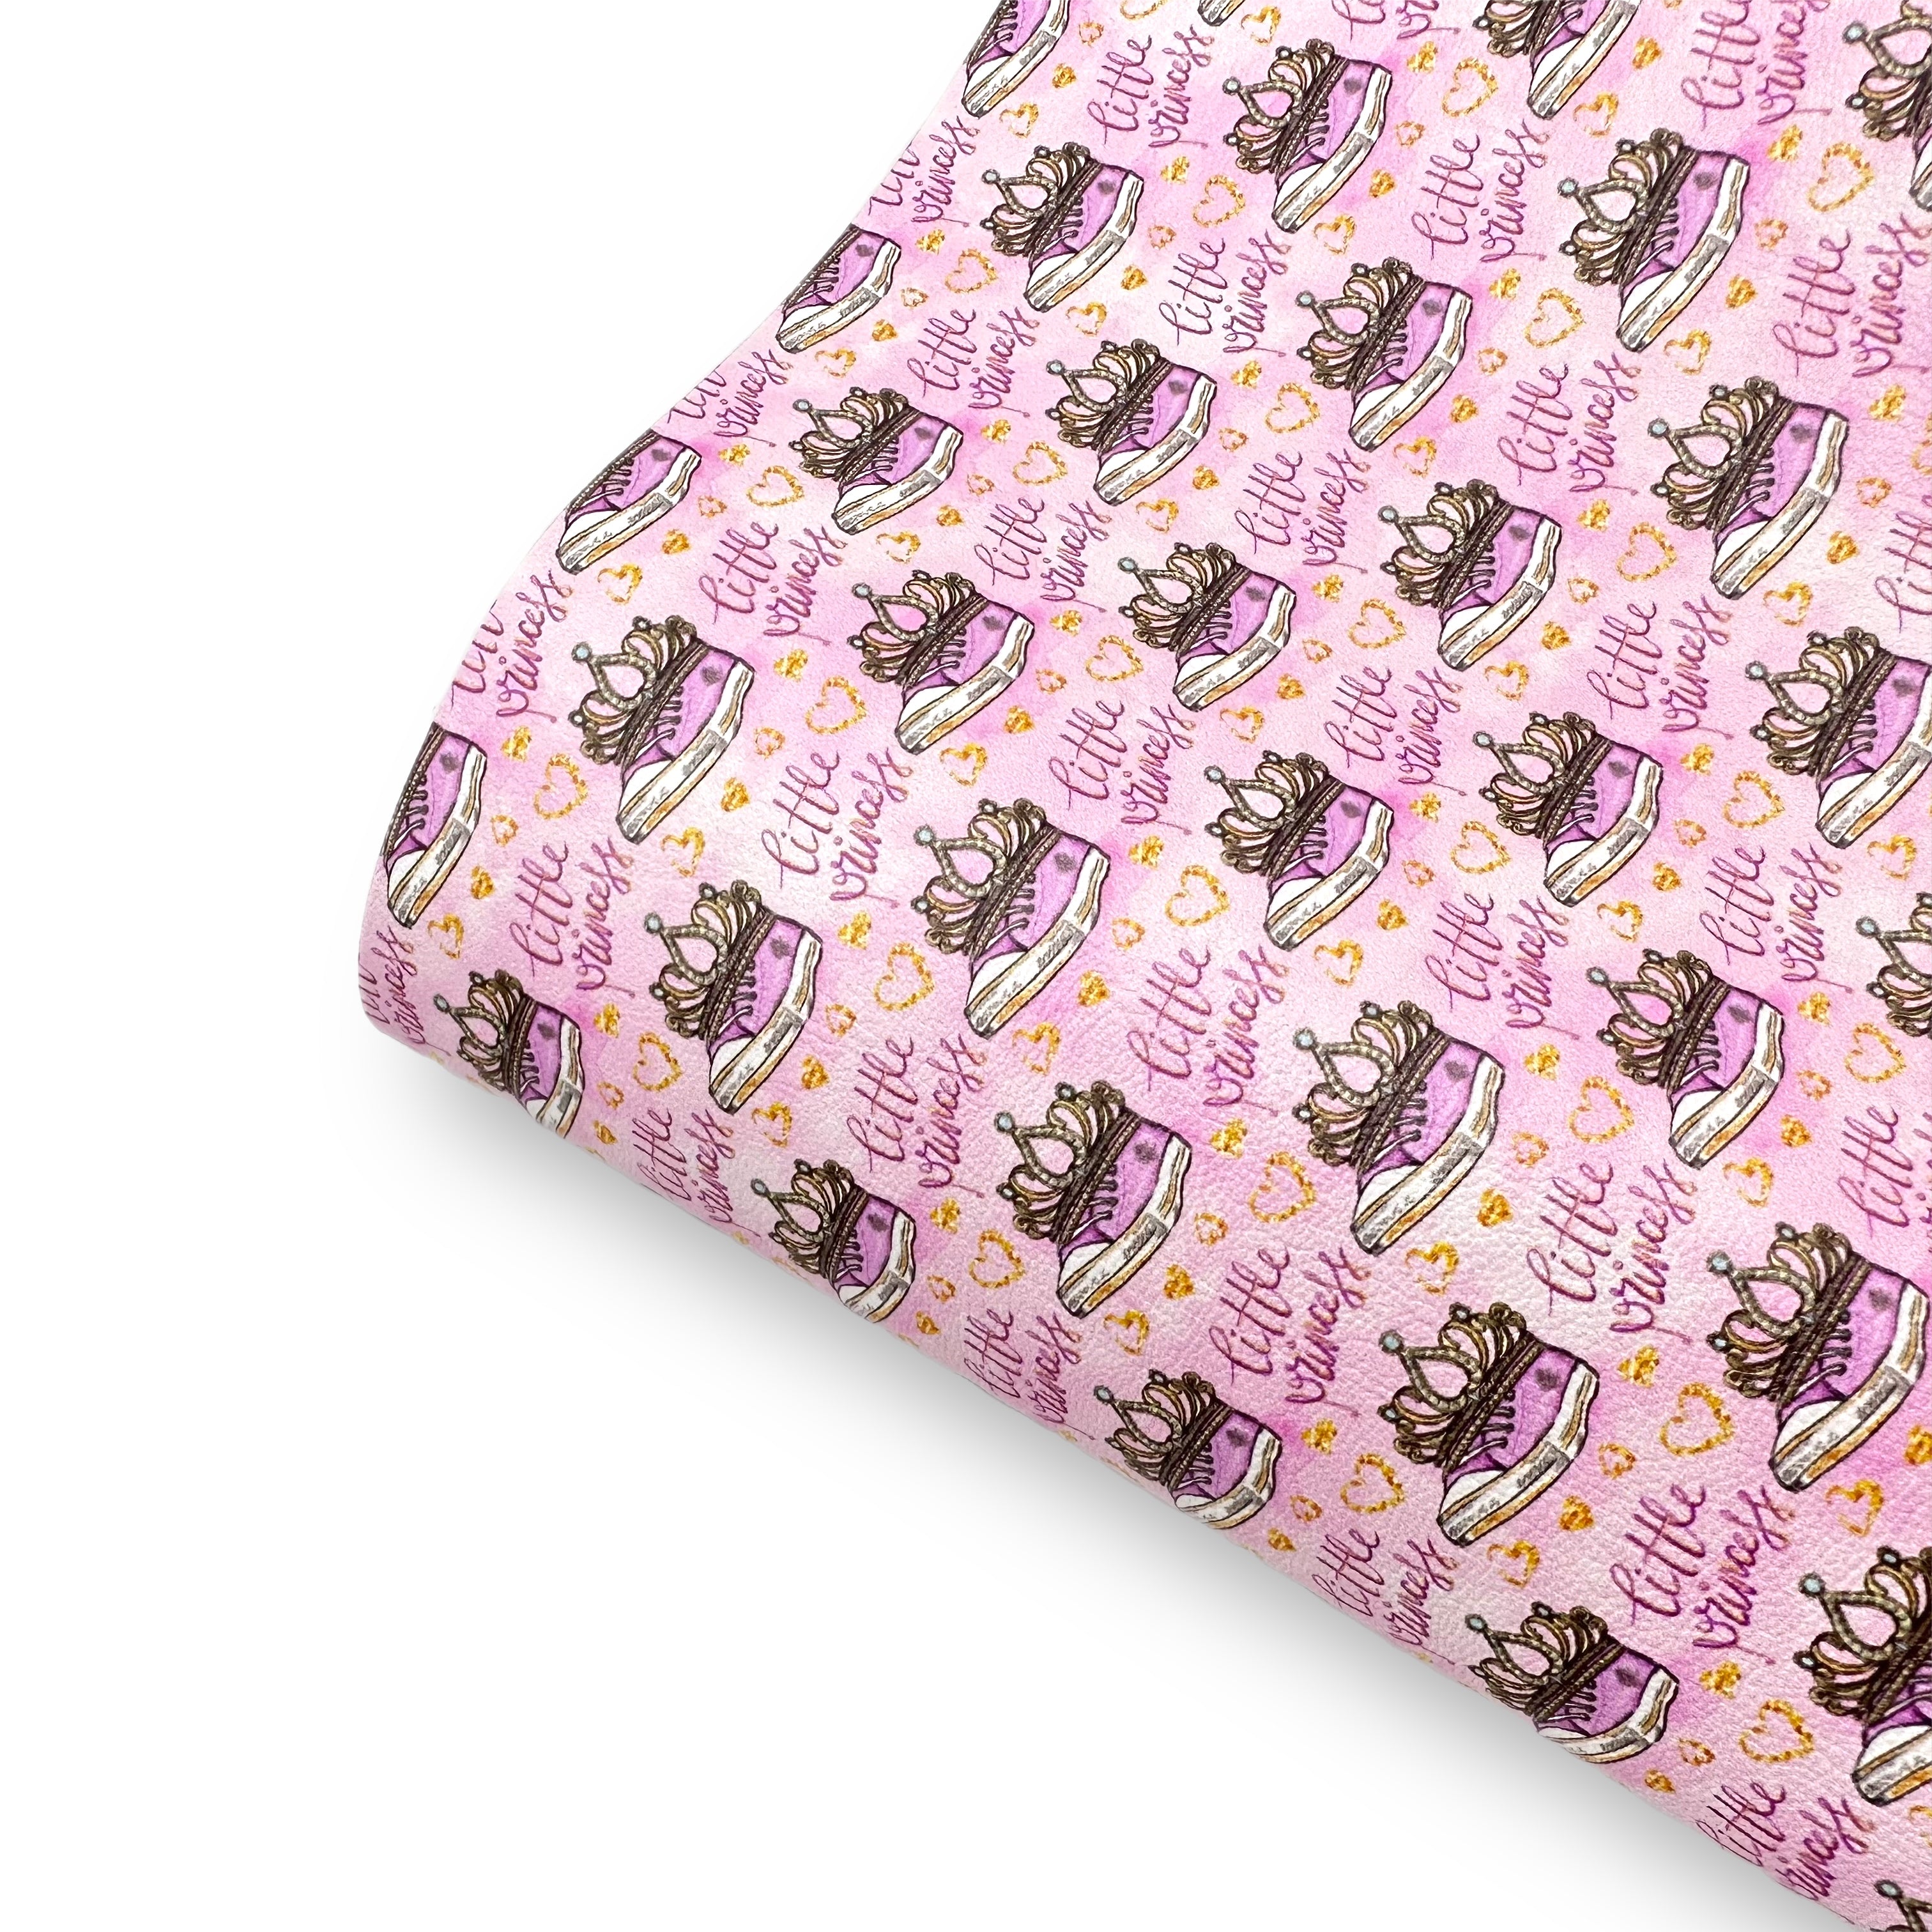 Little Princess Premium Faux Leather Fabric Sheets